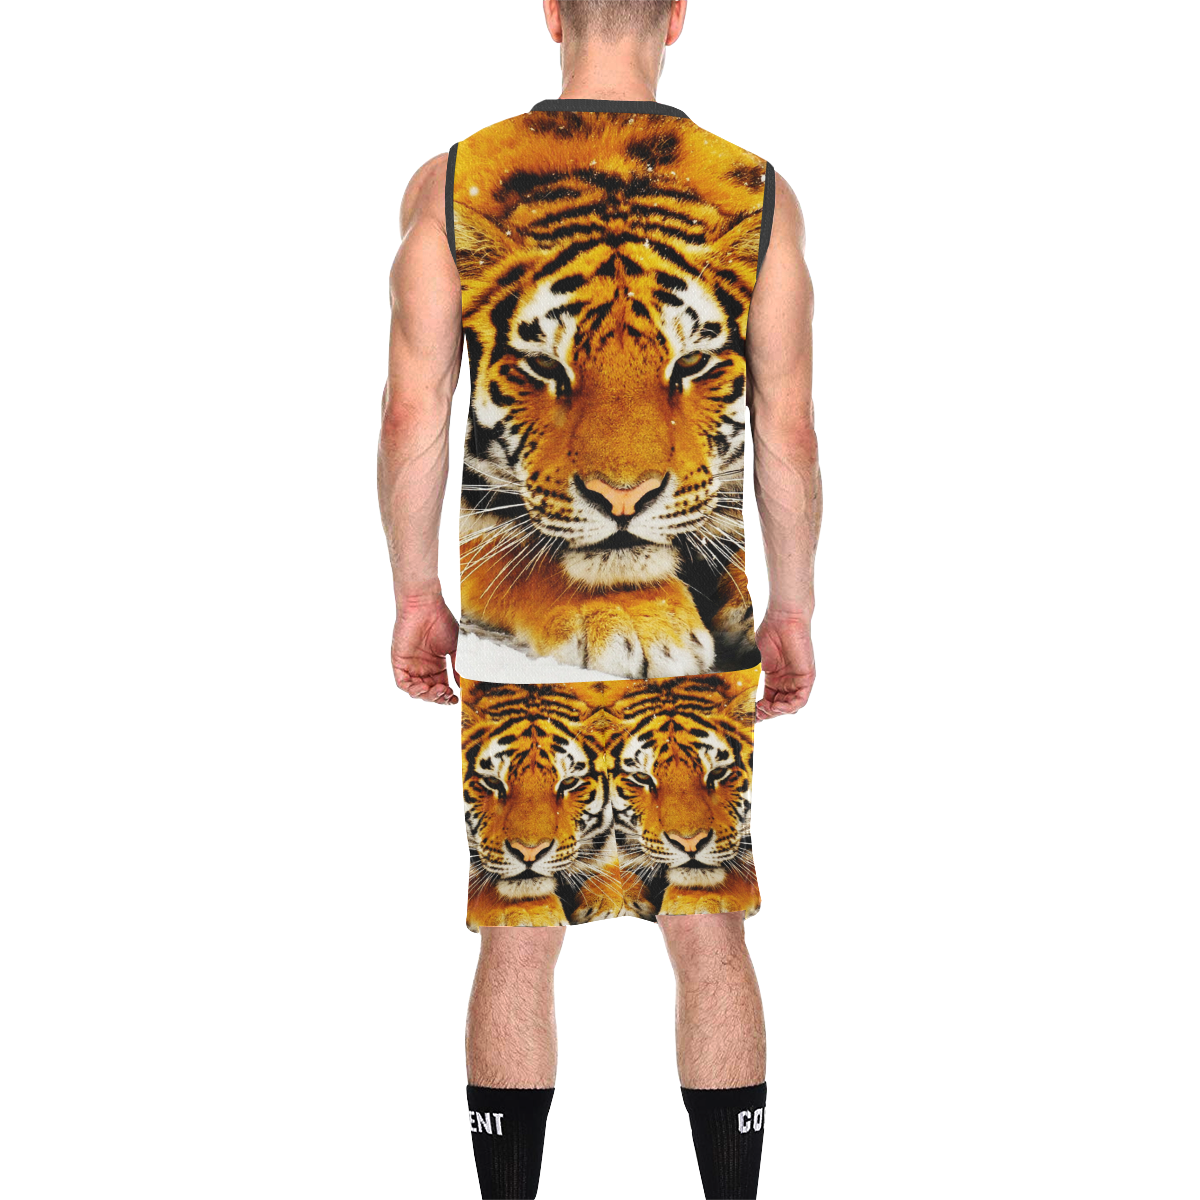 Siberian Tiger All Over Print Basketball Uniform